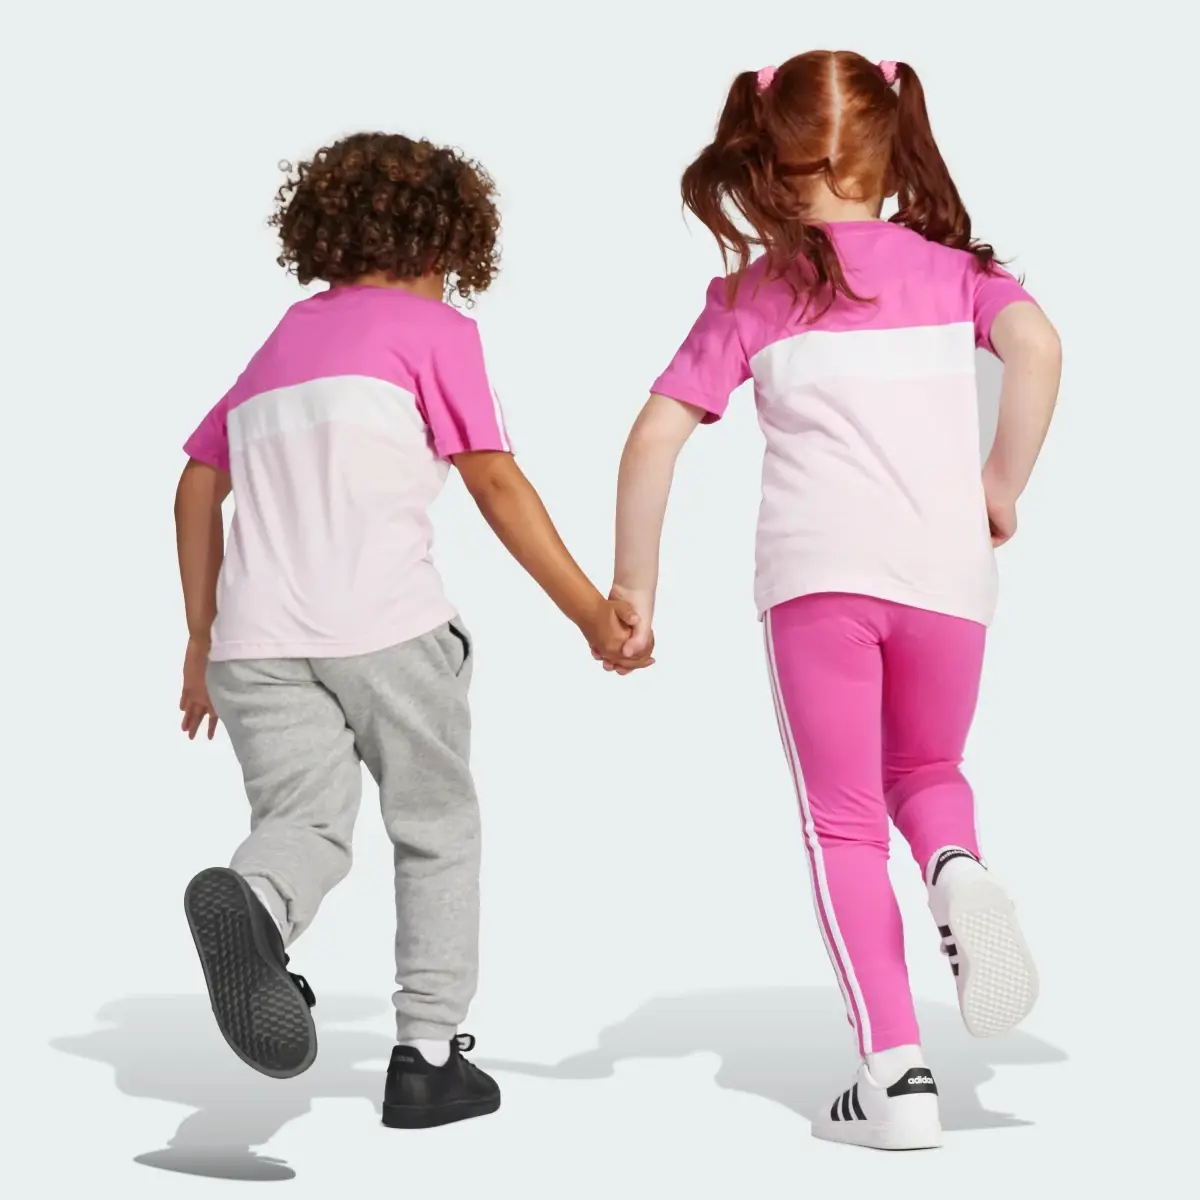 Adidas T-shirt Tiberio 3-Stripes Colorblock Cotton Kids. 2